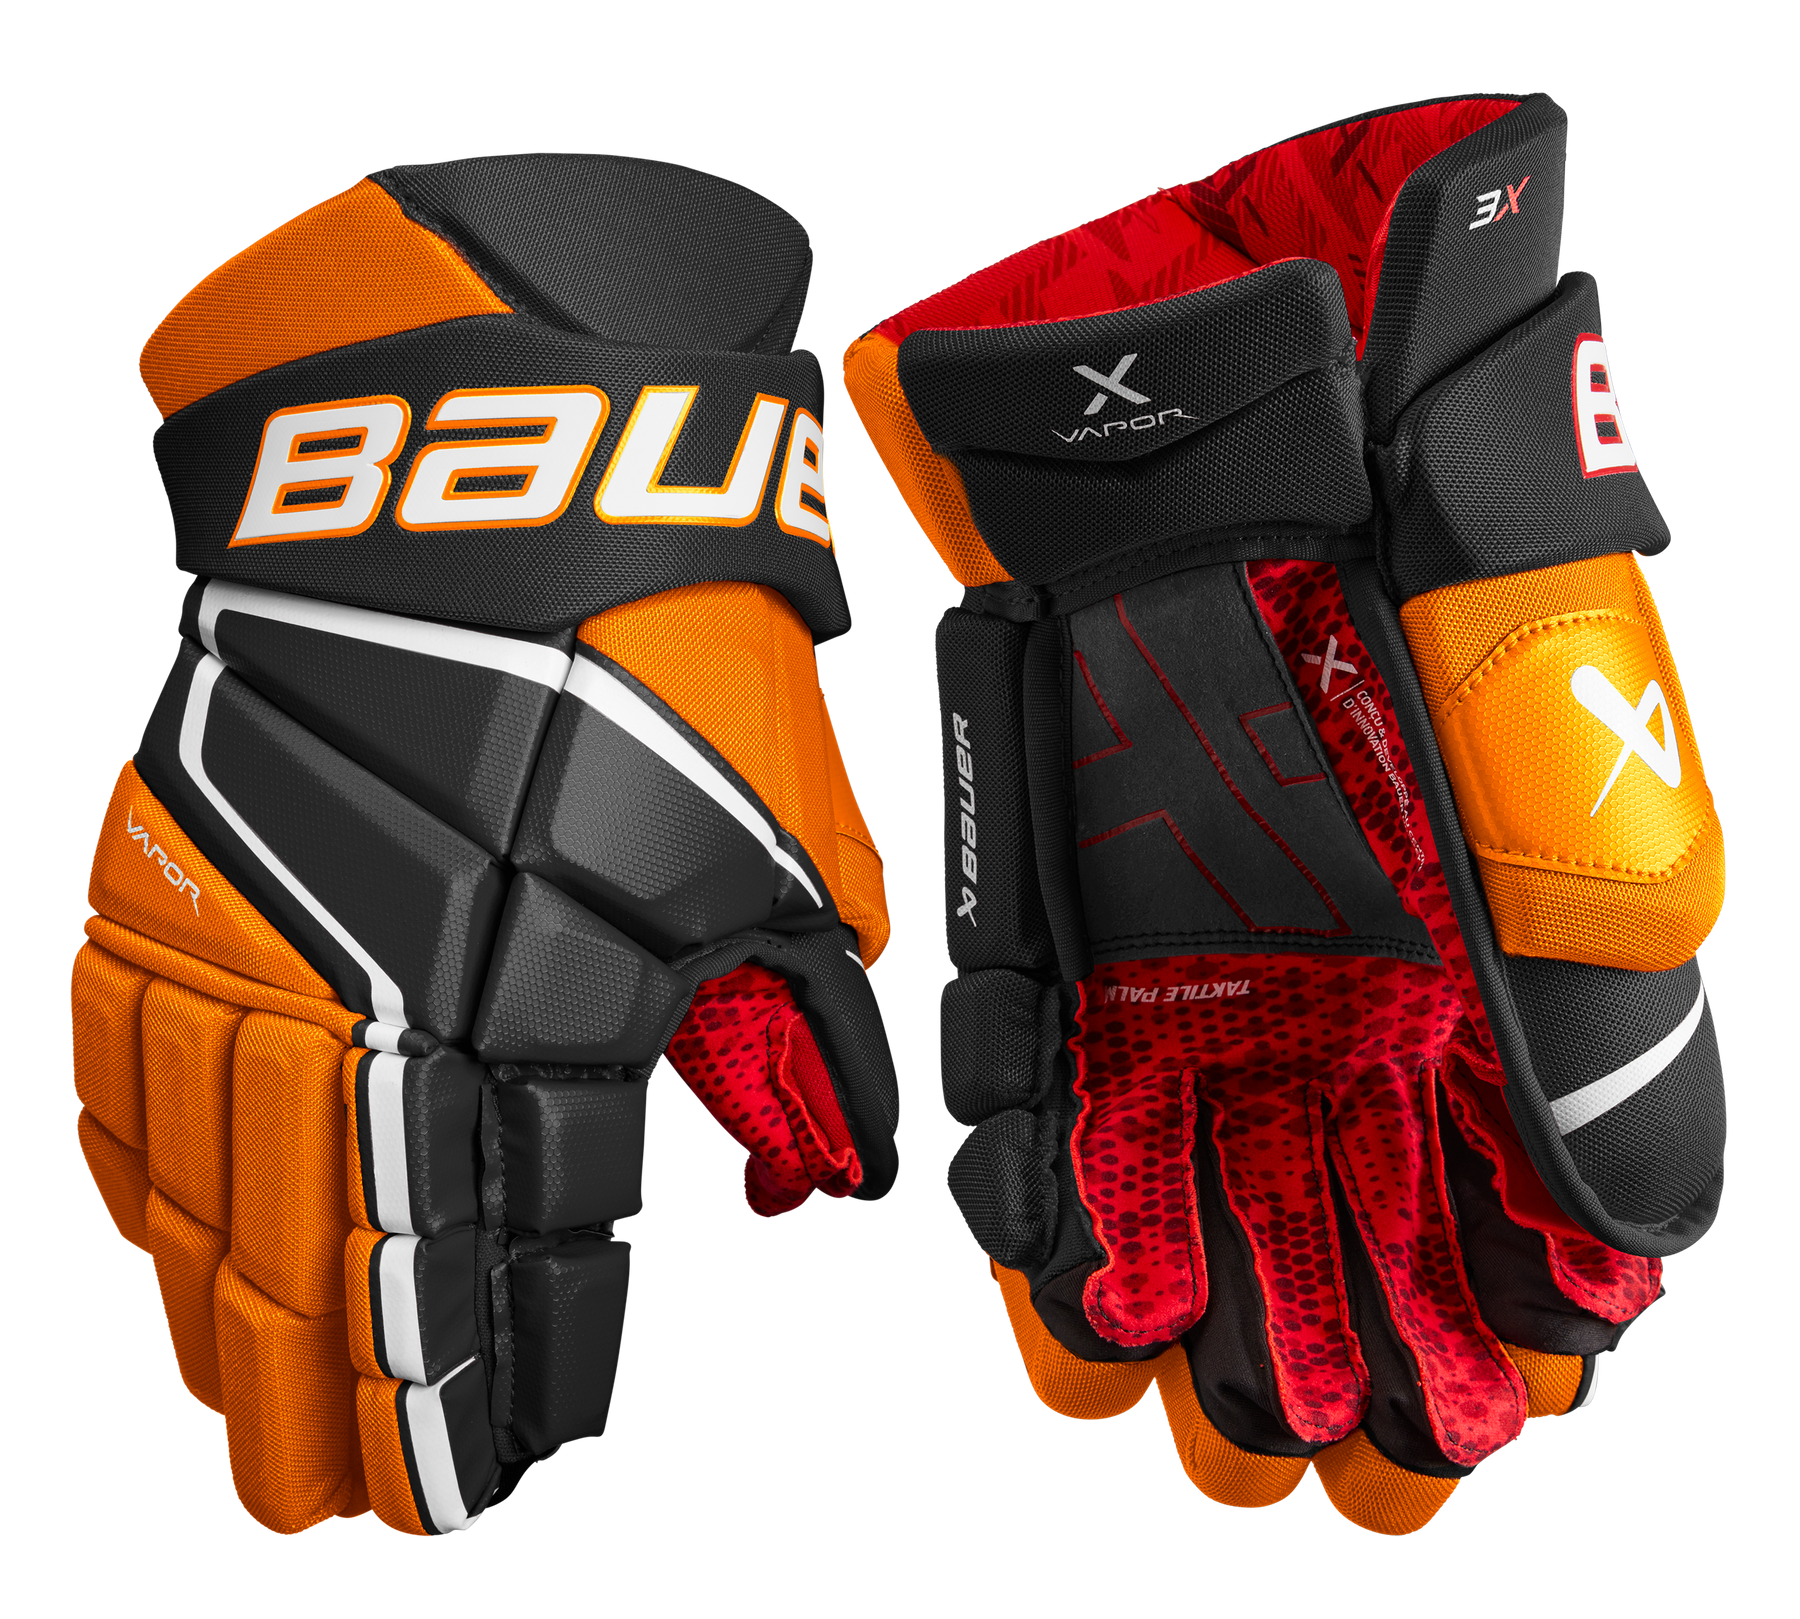 Bauer Vapor 3X gants de hockey senior